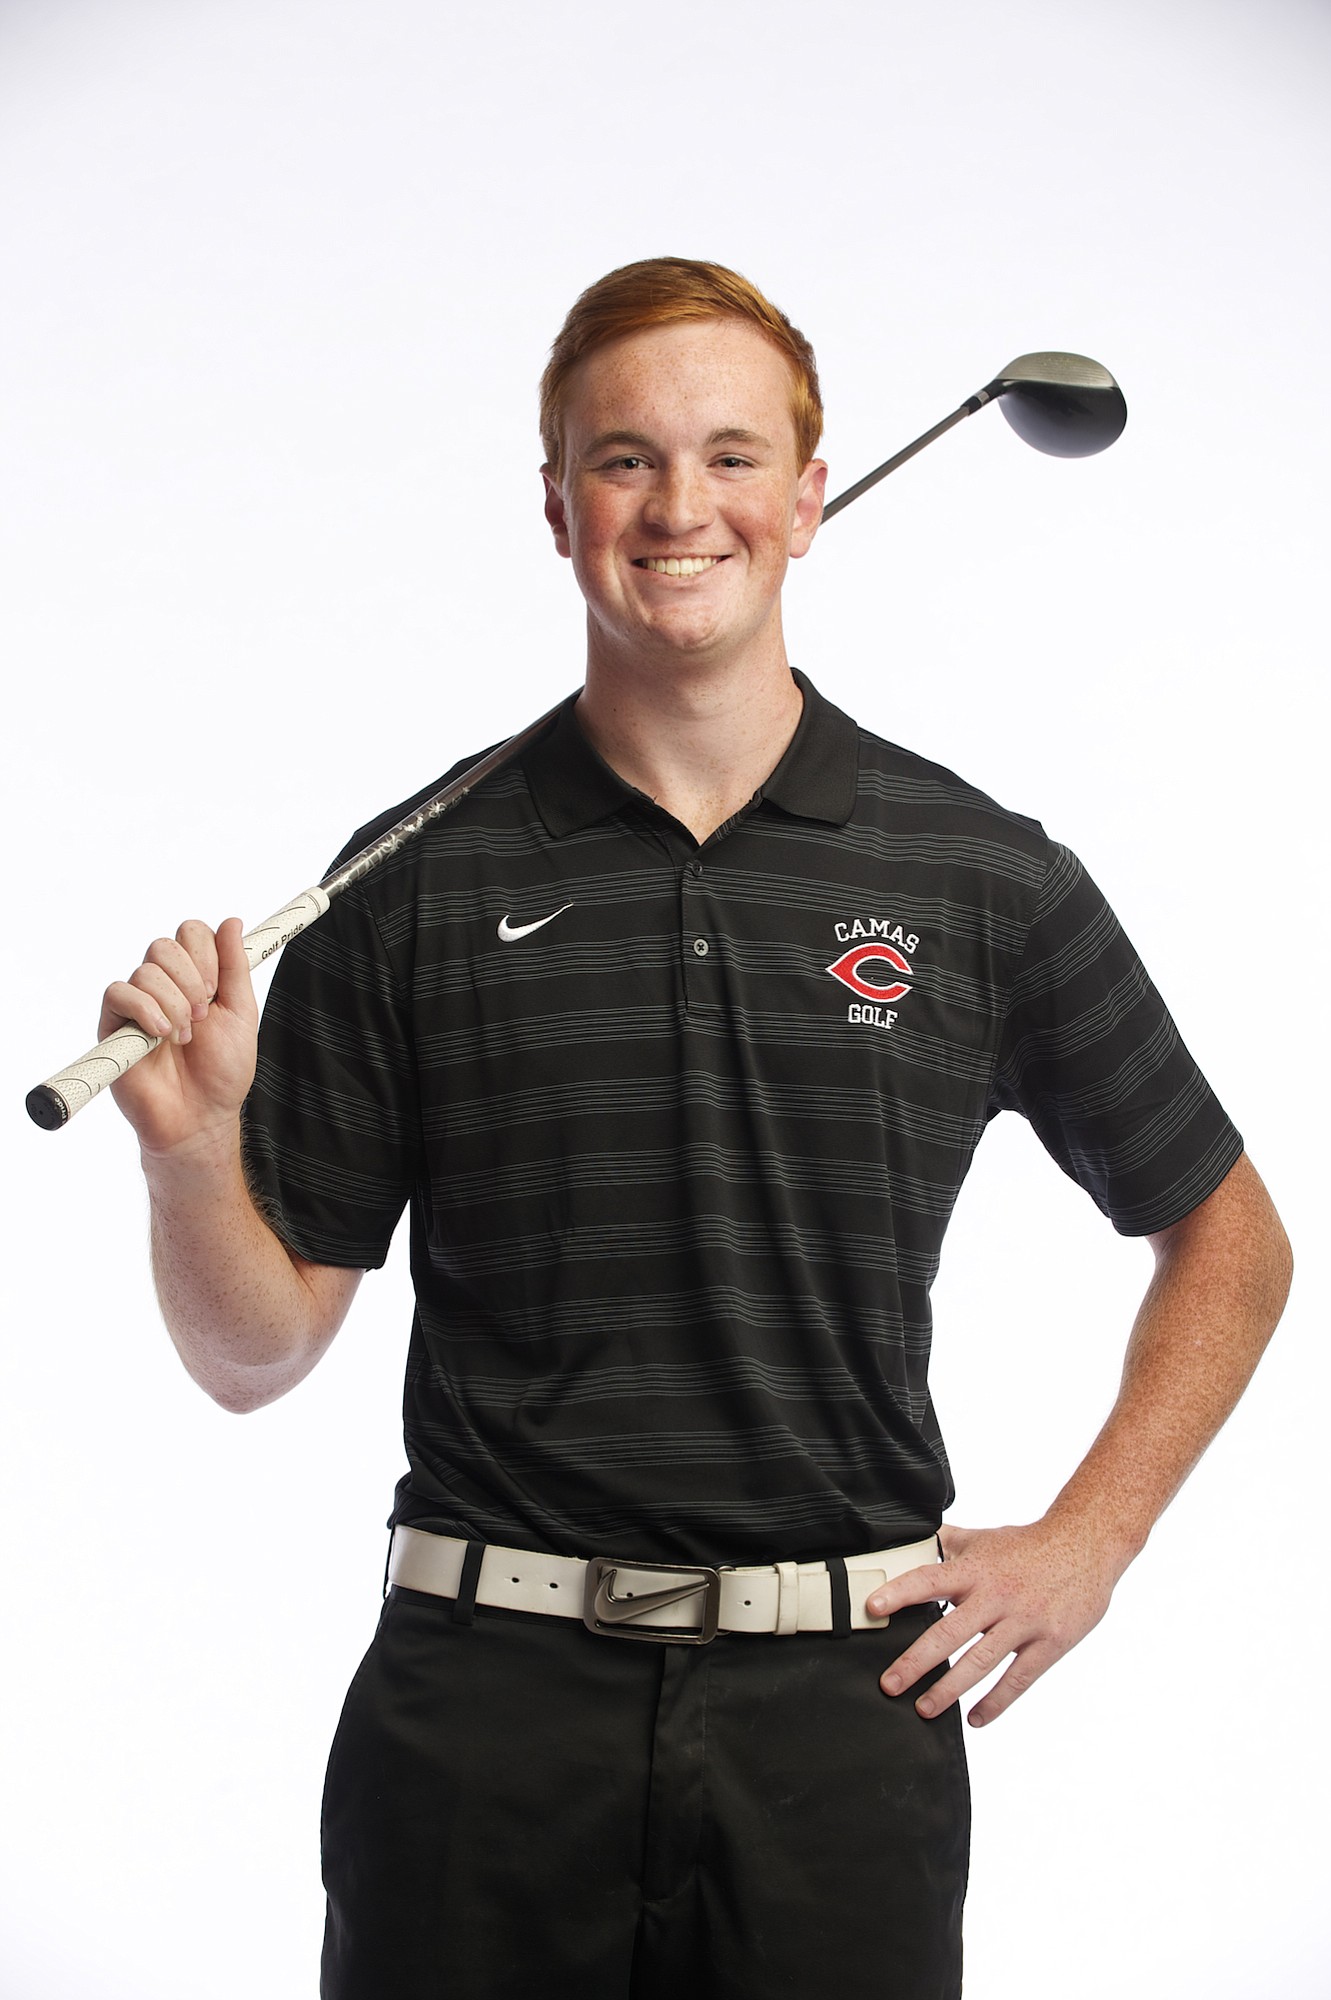 Brian Humphreys, shown, Thursday, June 11, 2015, is our All-Region Boys Golf player.